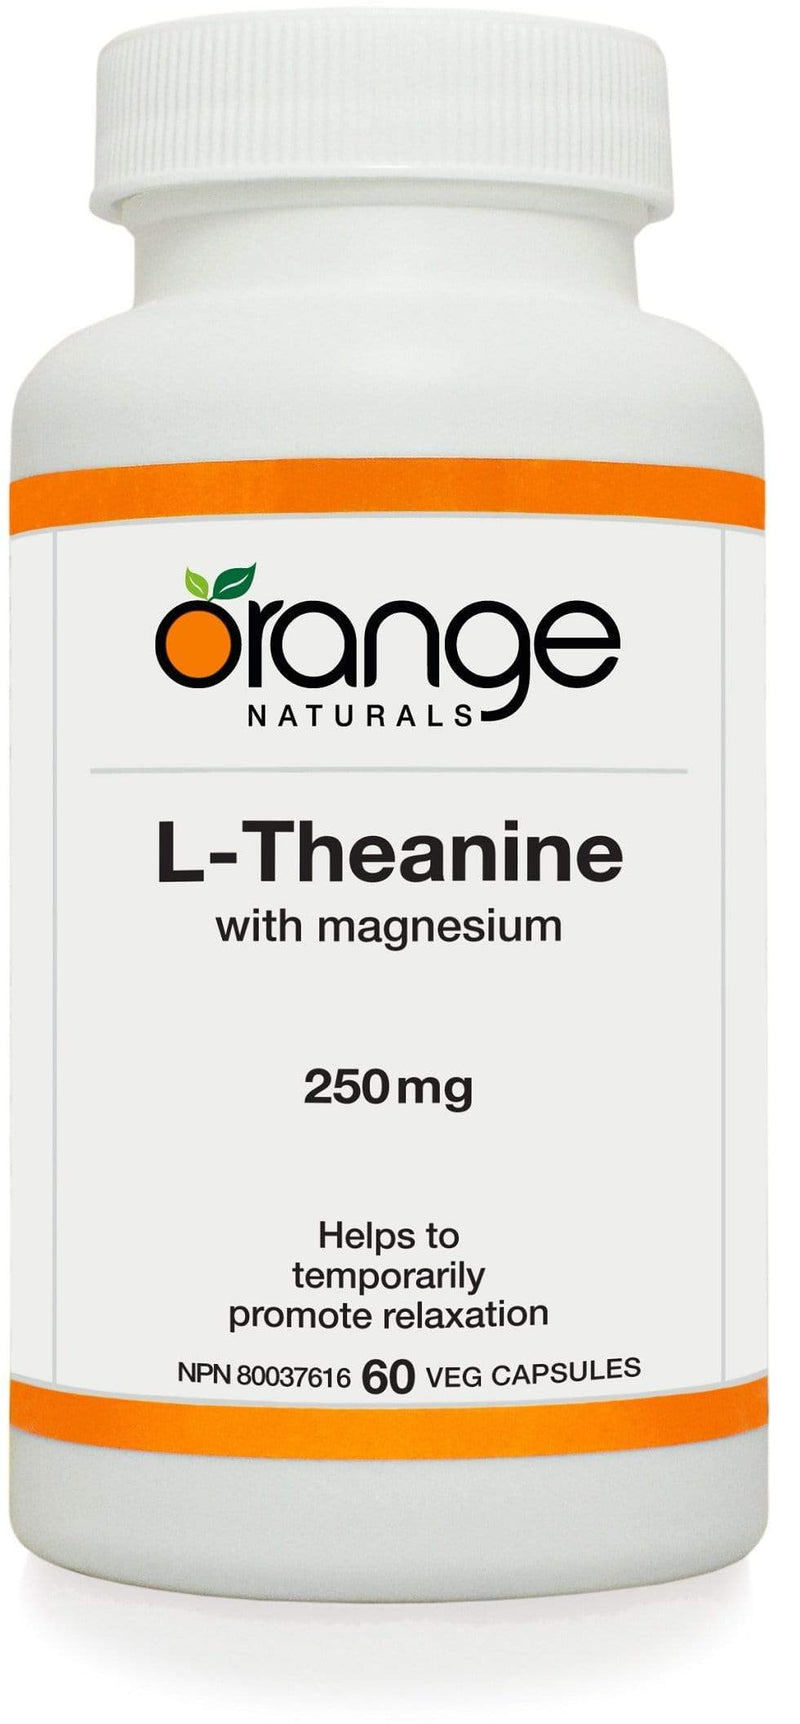 Orange Naturals L-Theanine 250mg